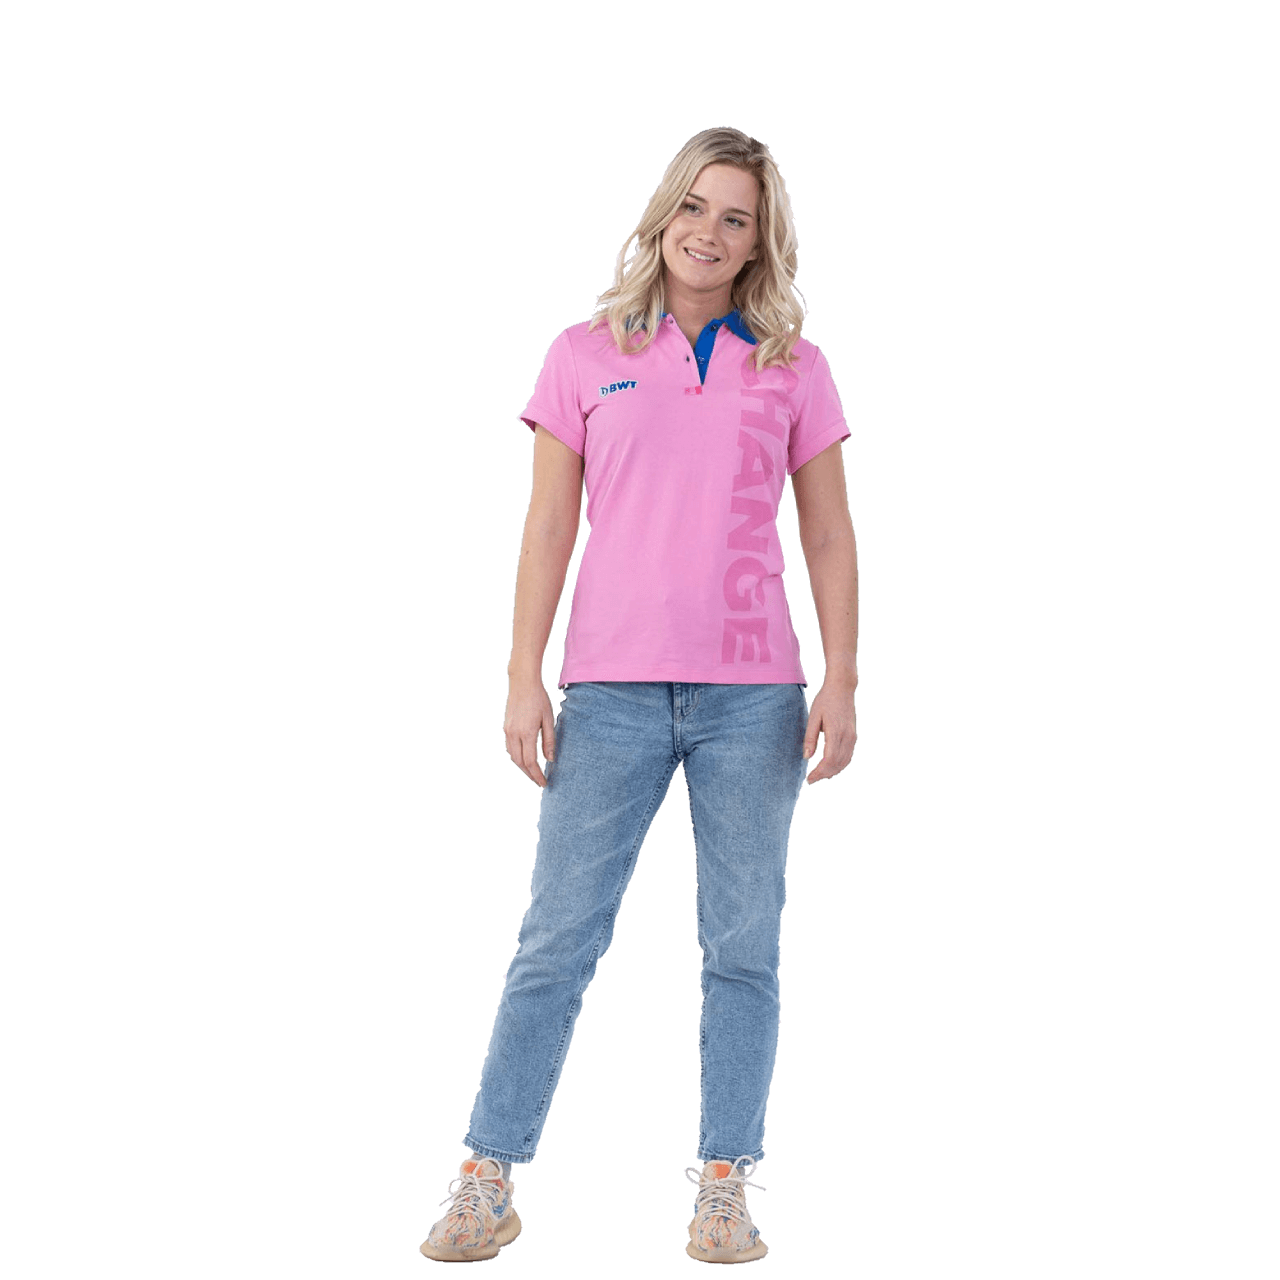 Dame trägt BWT Change the World Polo in pink mit blauem BWT Logo